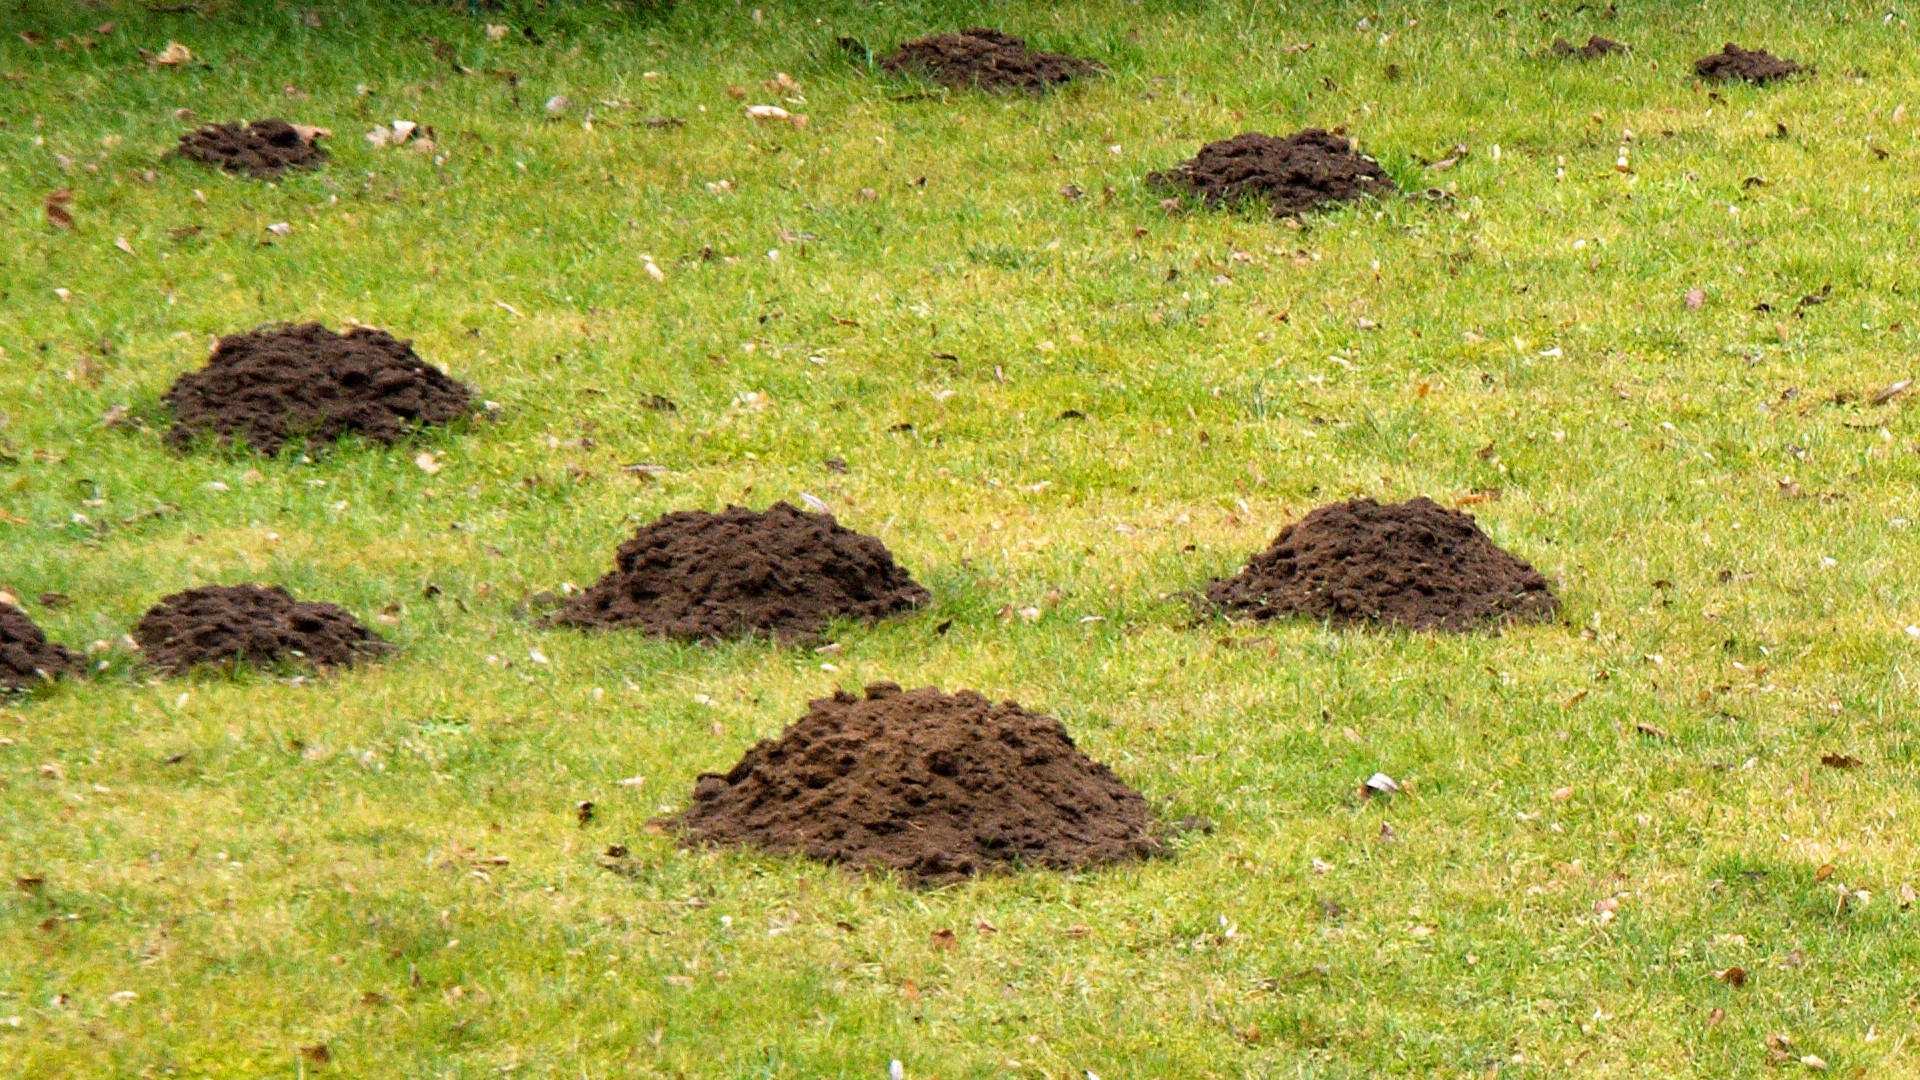 Pat Sullivan helps you rid your yard of moles